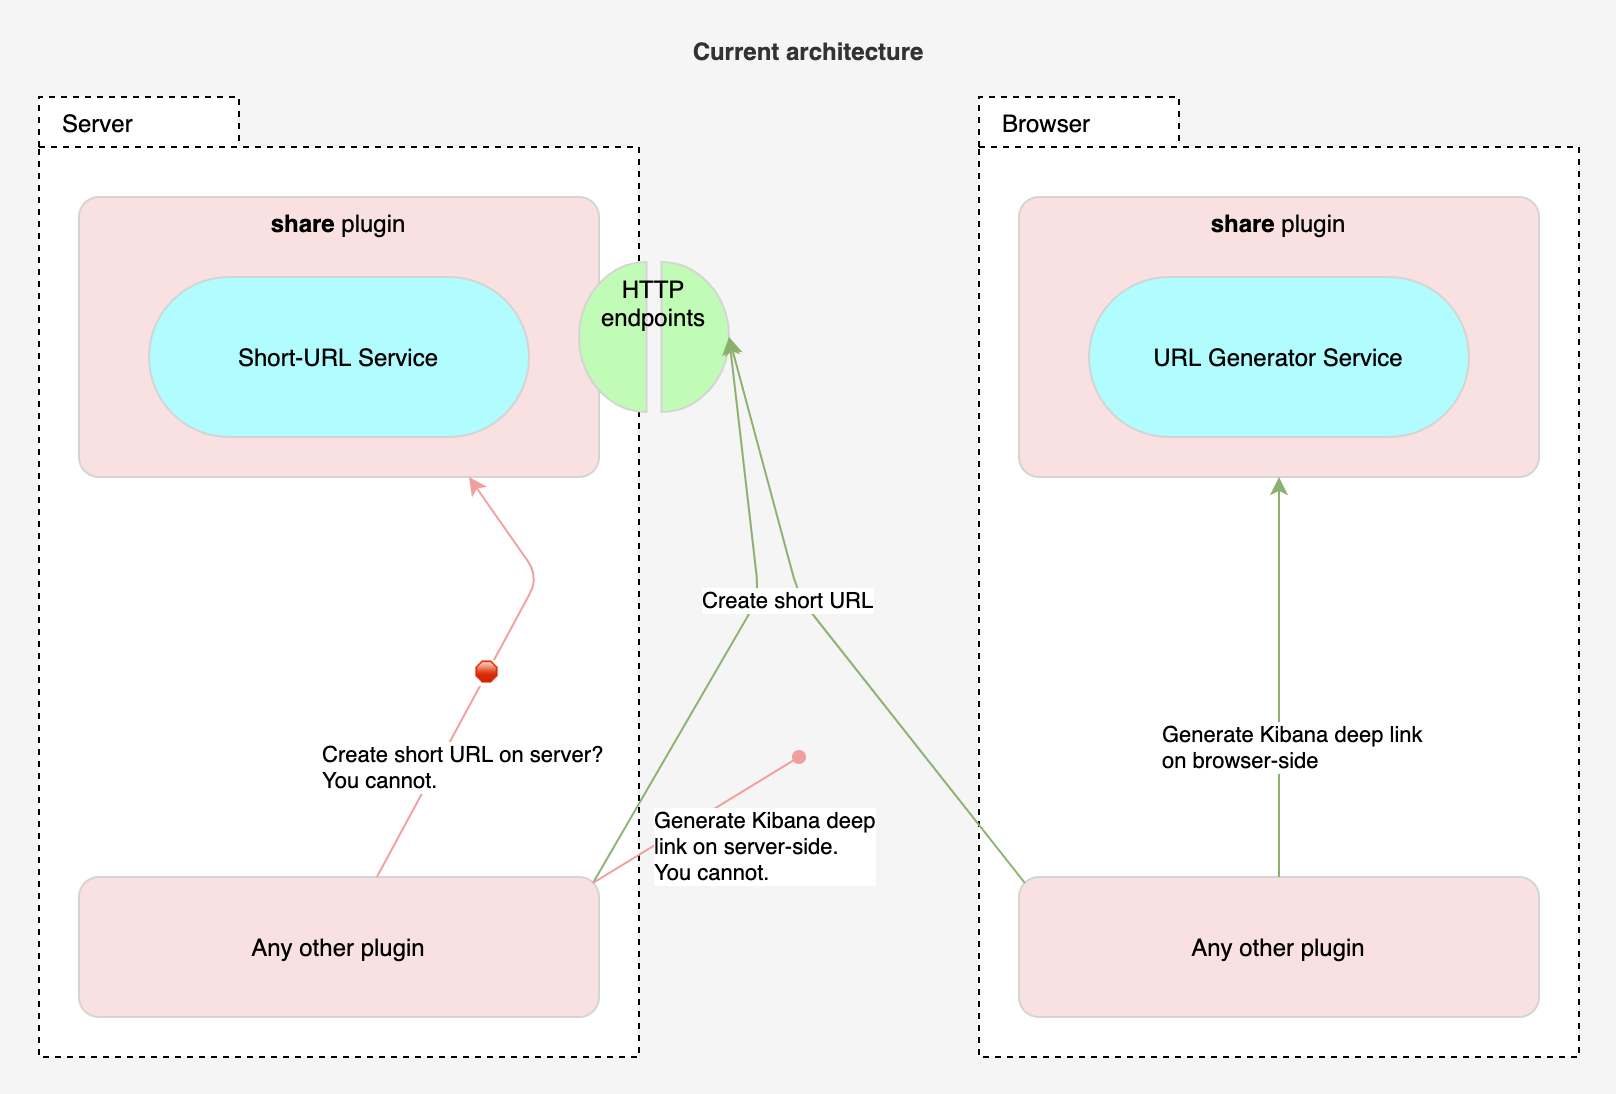 Current Short URL Service and URL Generator Service architecture